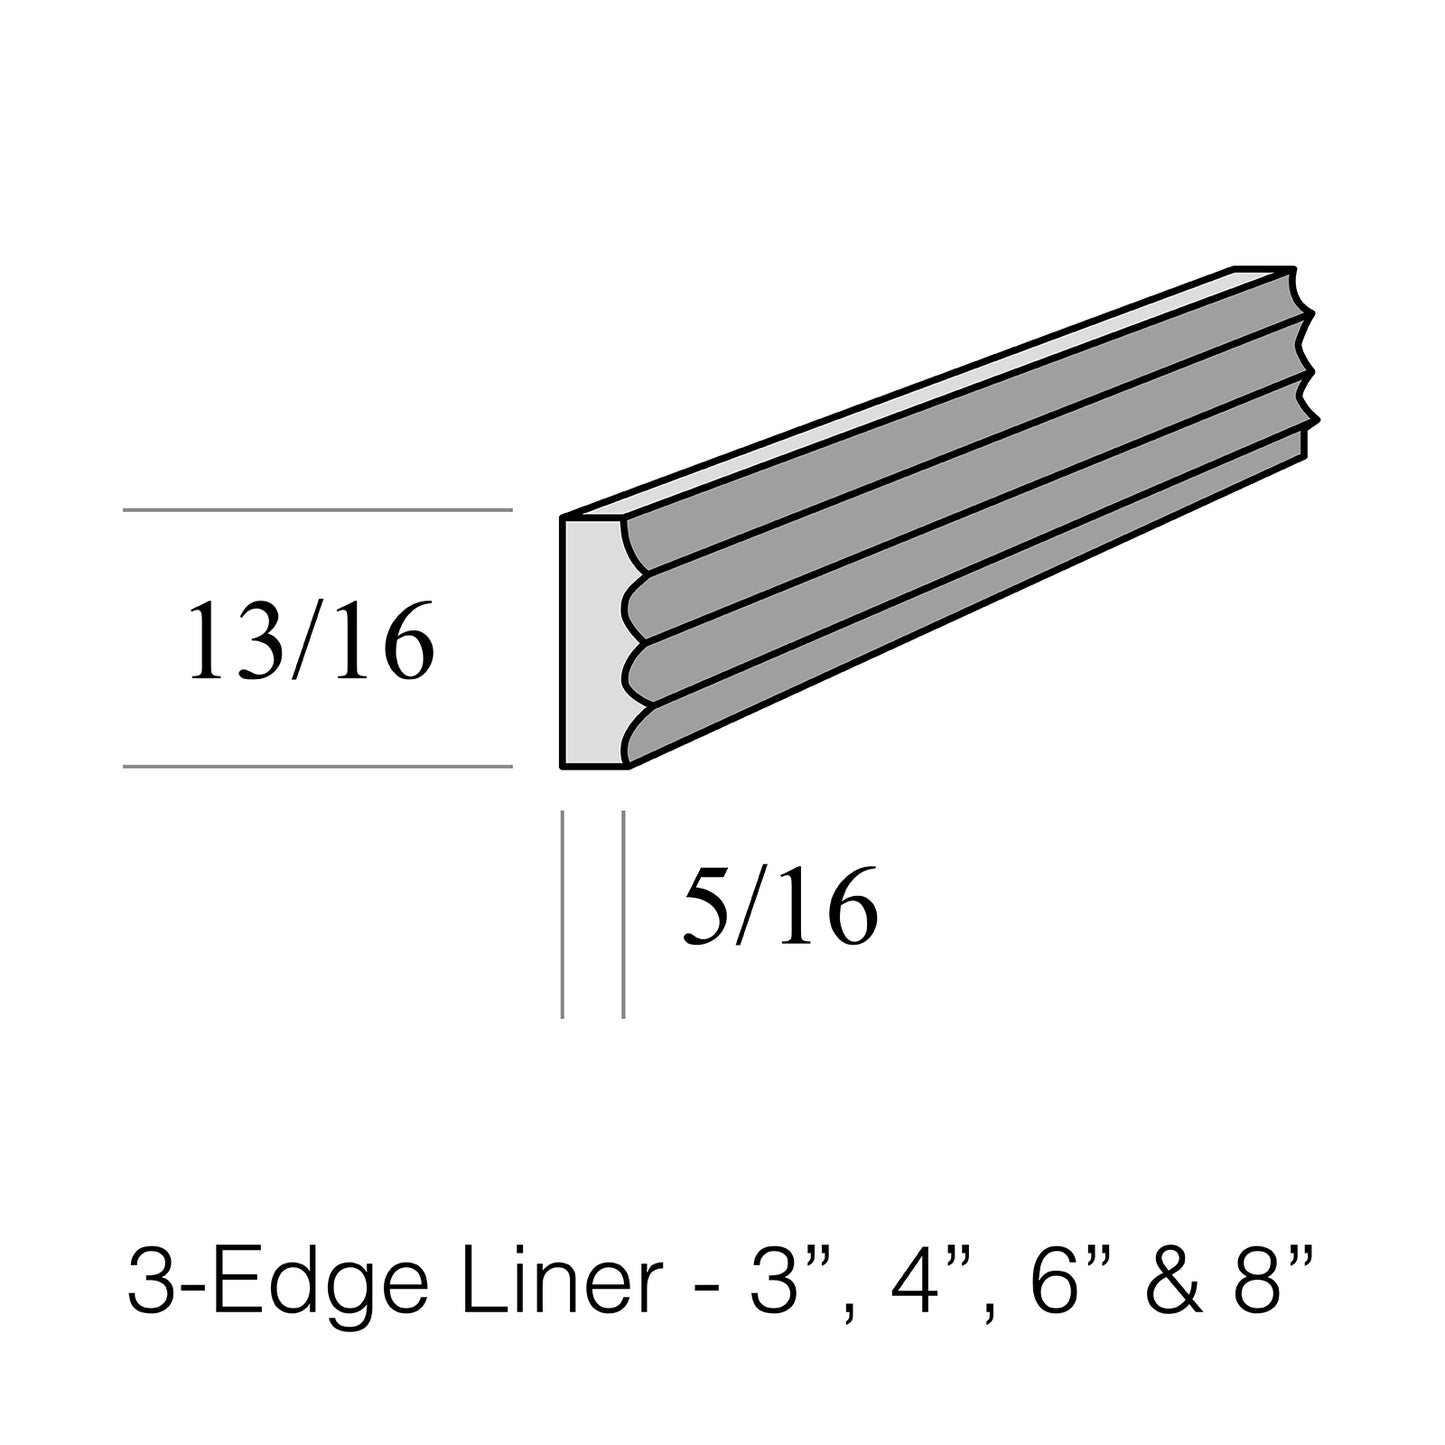 Three-Edge Liner 4"